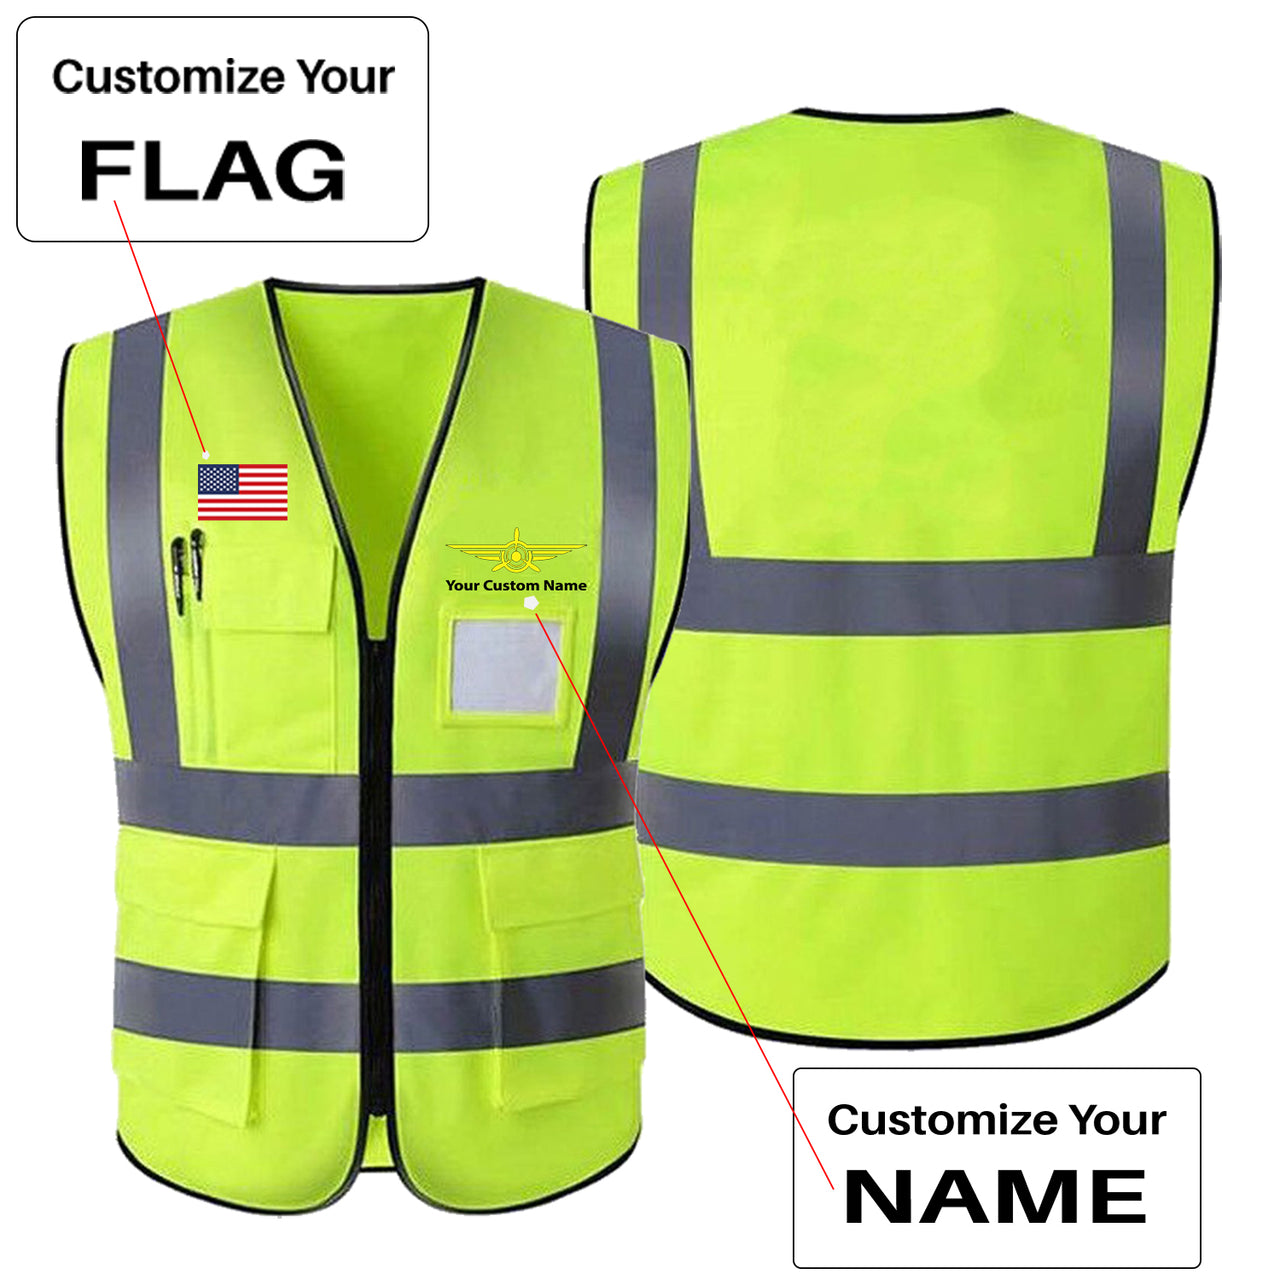 Custom Flag & Name with Badge 3 Designed Reflective Vests